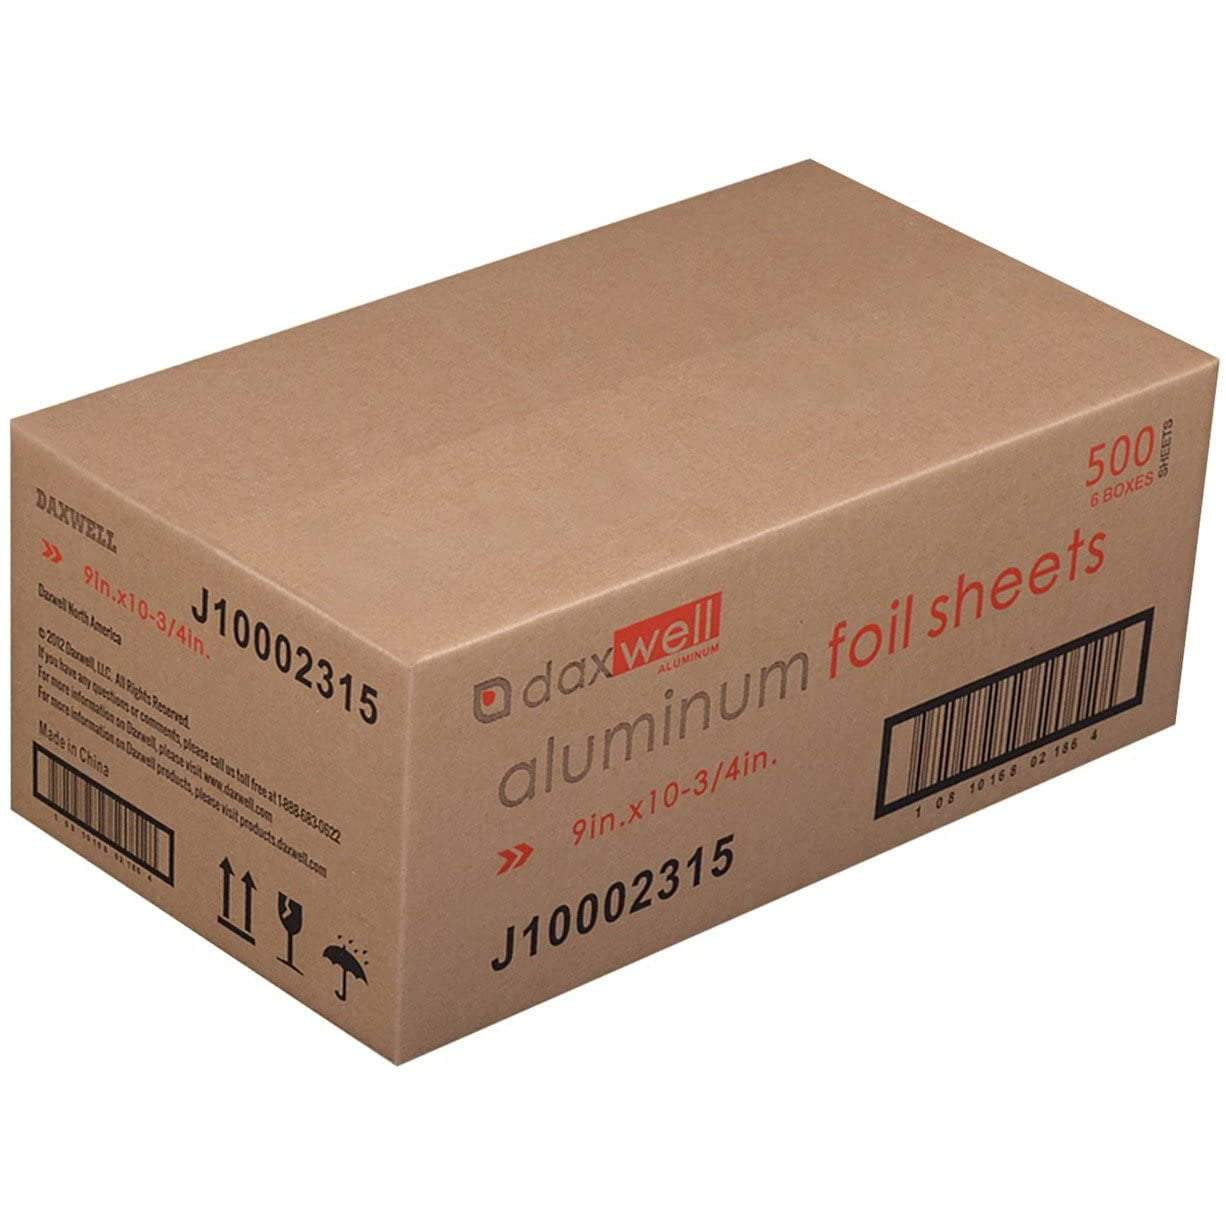 Pop-Up Interfolded Aluminum Foil Sheets 12 x 10 3/4, Silver, 500/Box 